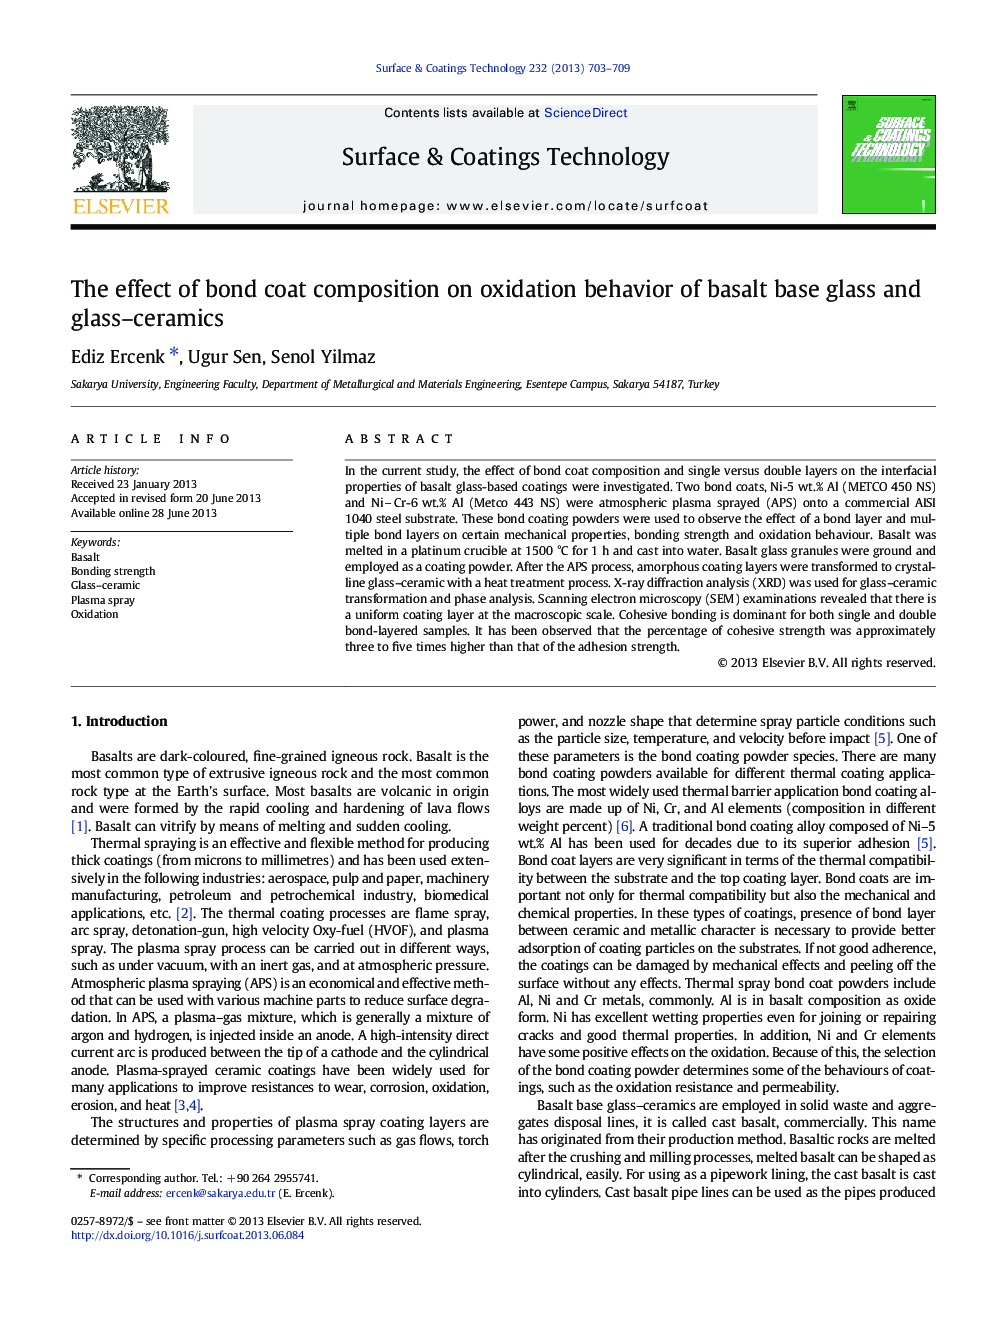 The effect of bond coat composition on oxidation behavior of basalt base glass and glass-ceramics